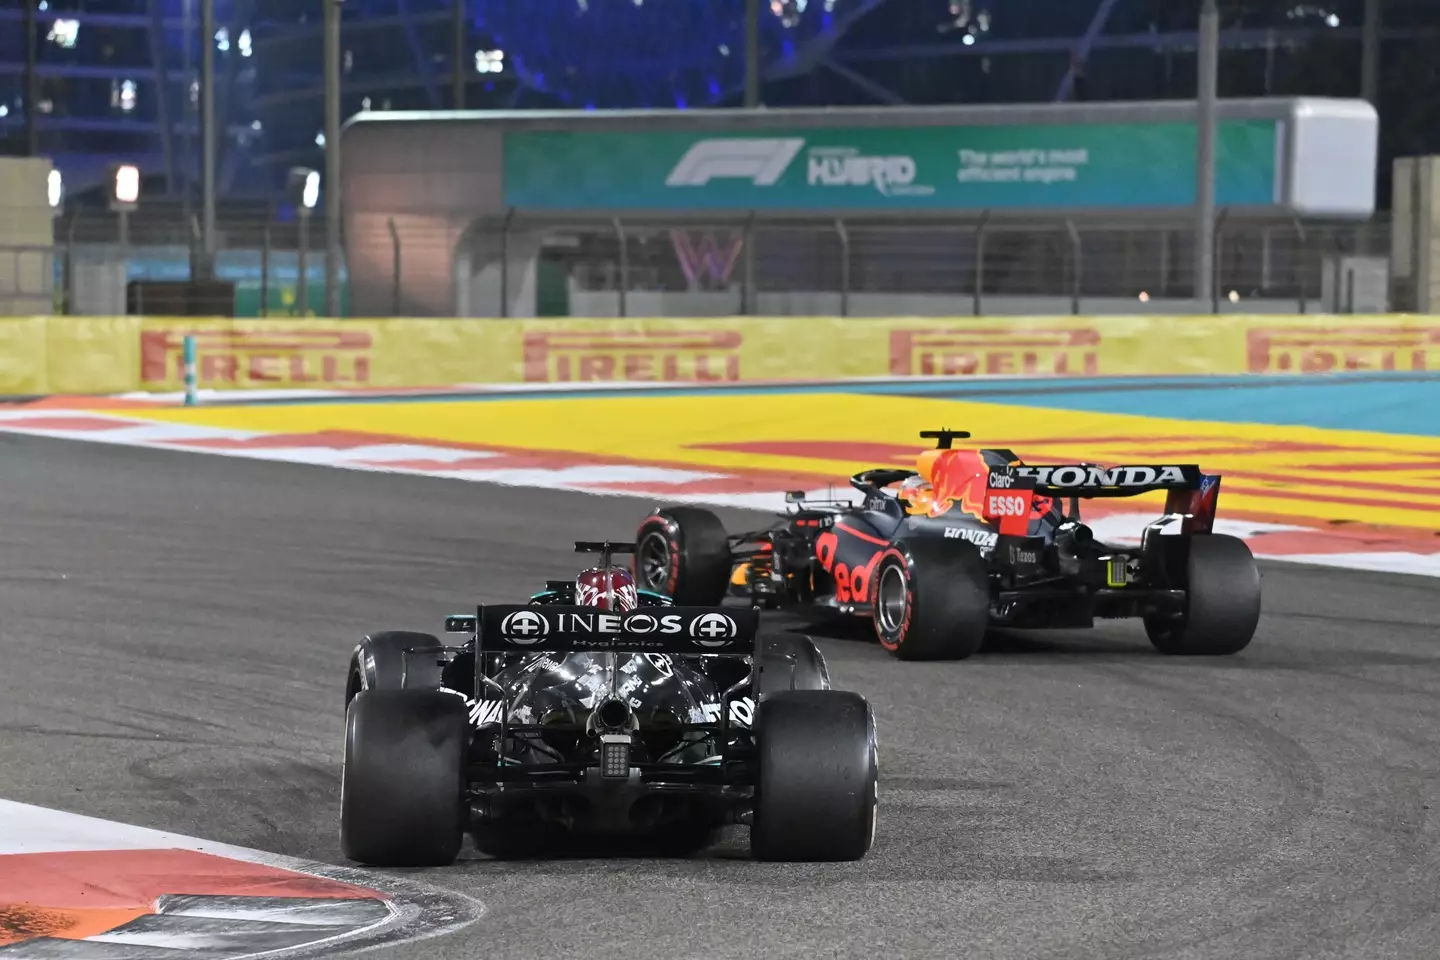 Verstappen leading Hamilton on the final lap. Image: PA Images